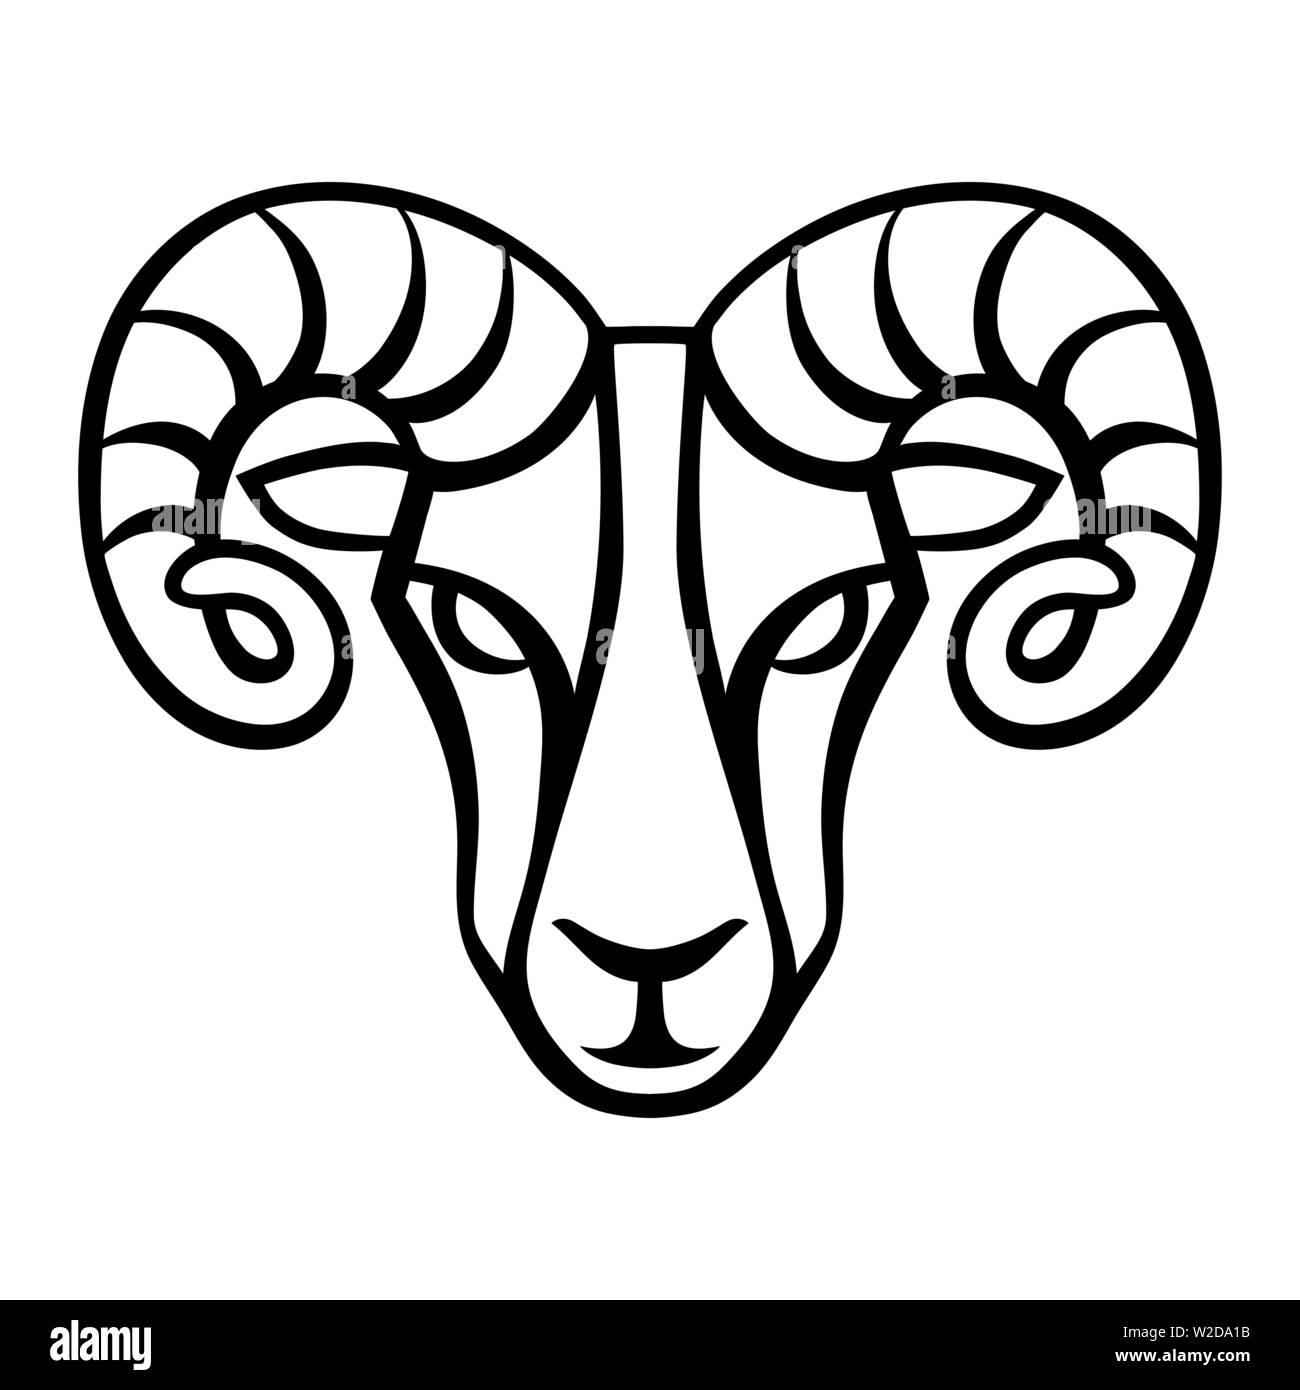 Aries zodiac sign, golden horoscope symbol Stock Vector Image & Art - Alamy